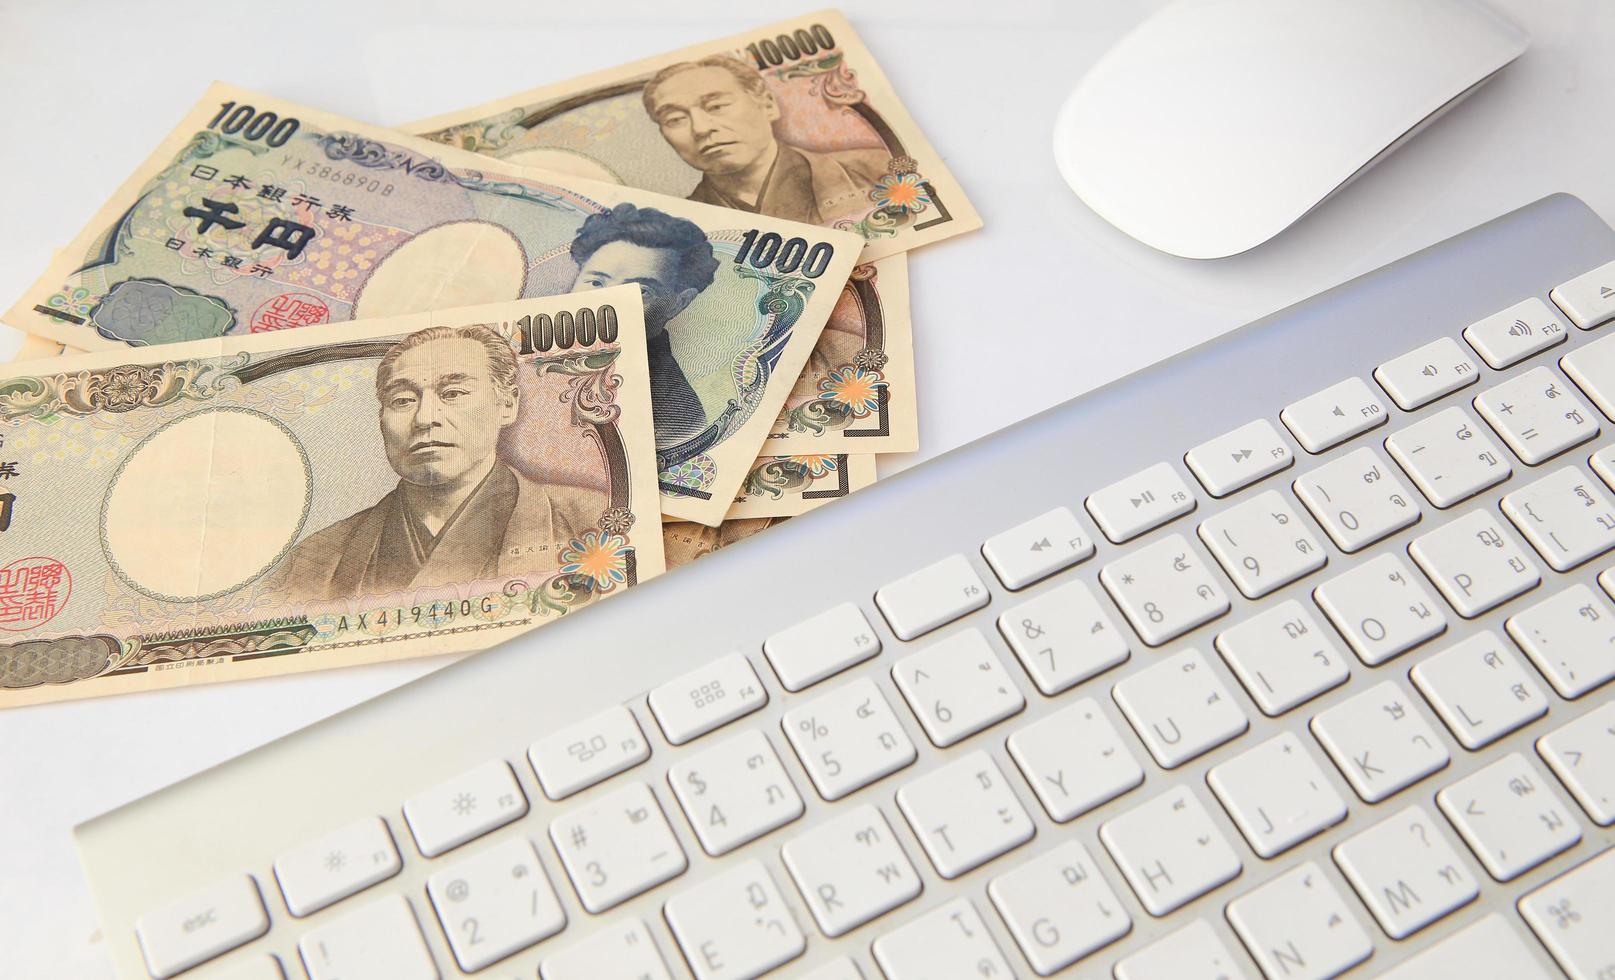 Japanese Yen on keyboard photo